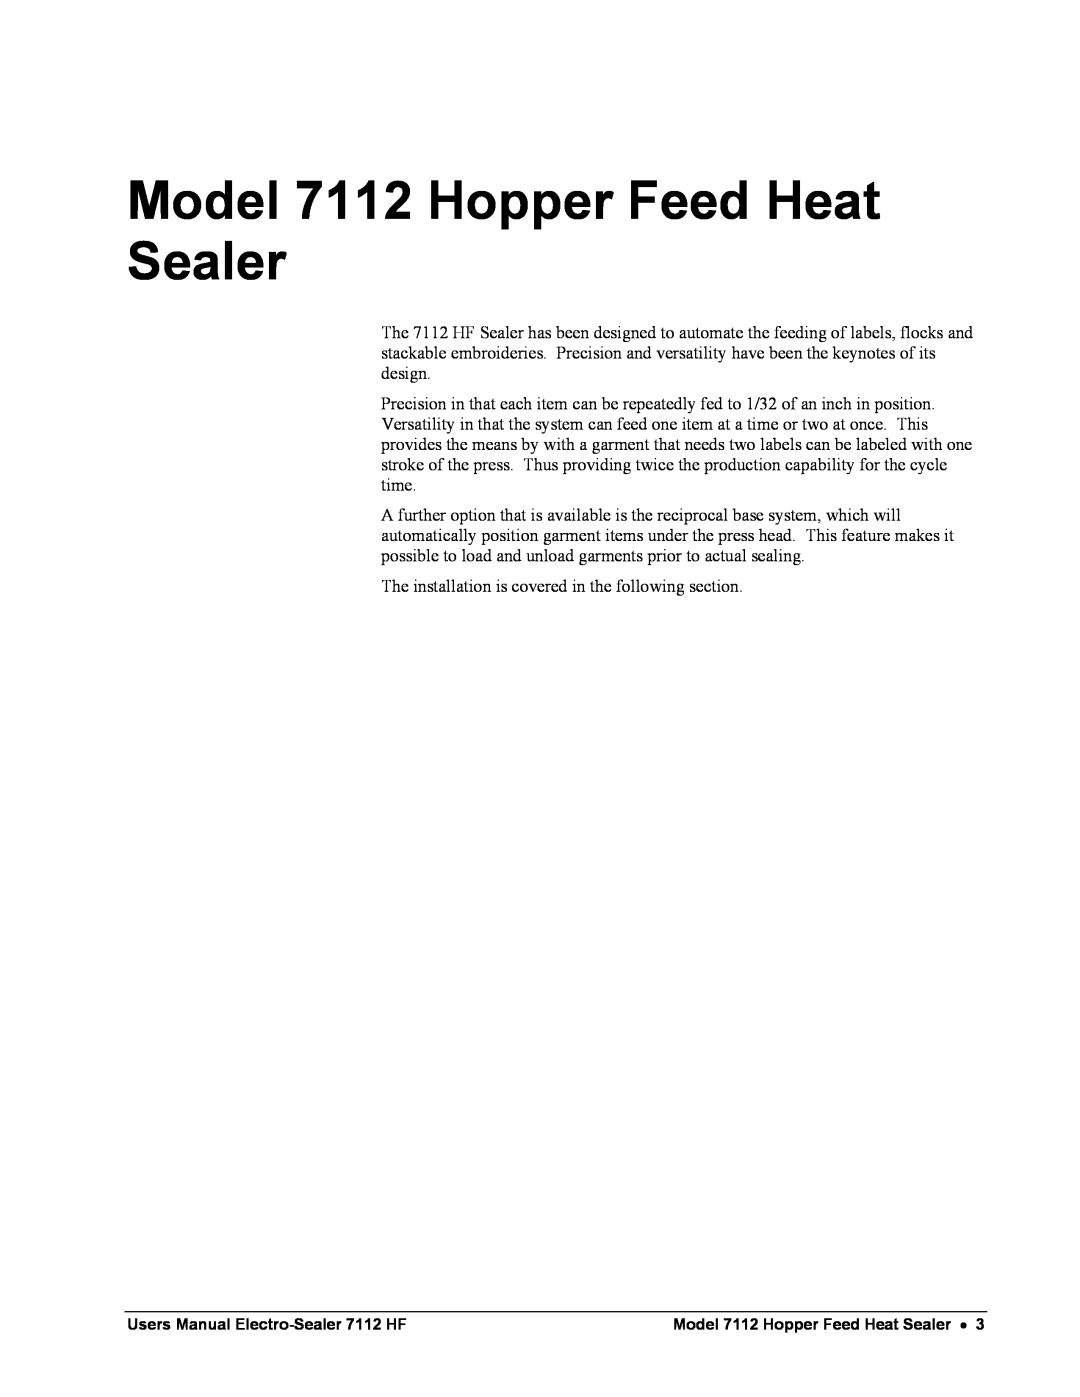 Avery 7112 HF user manual Model 7112 Hopper Feed Heat Sealer 